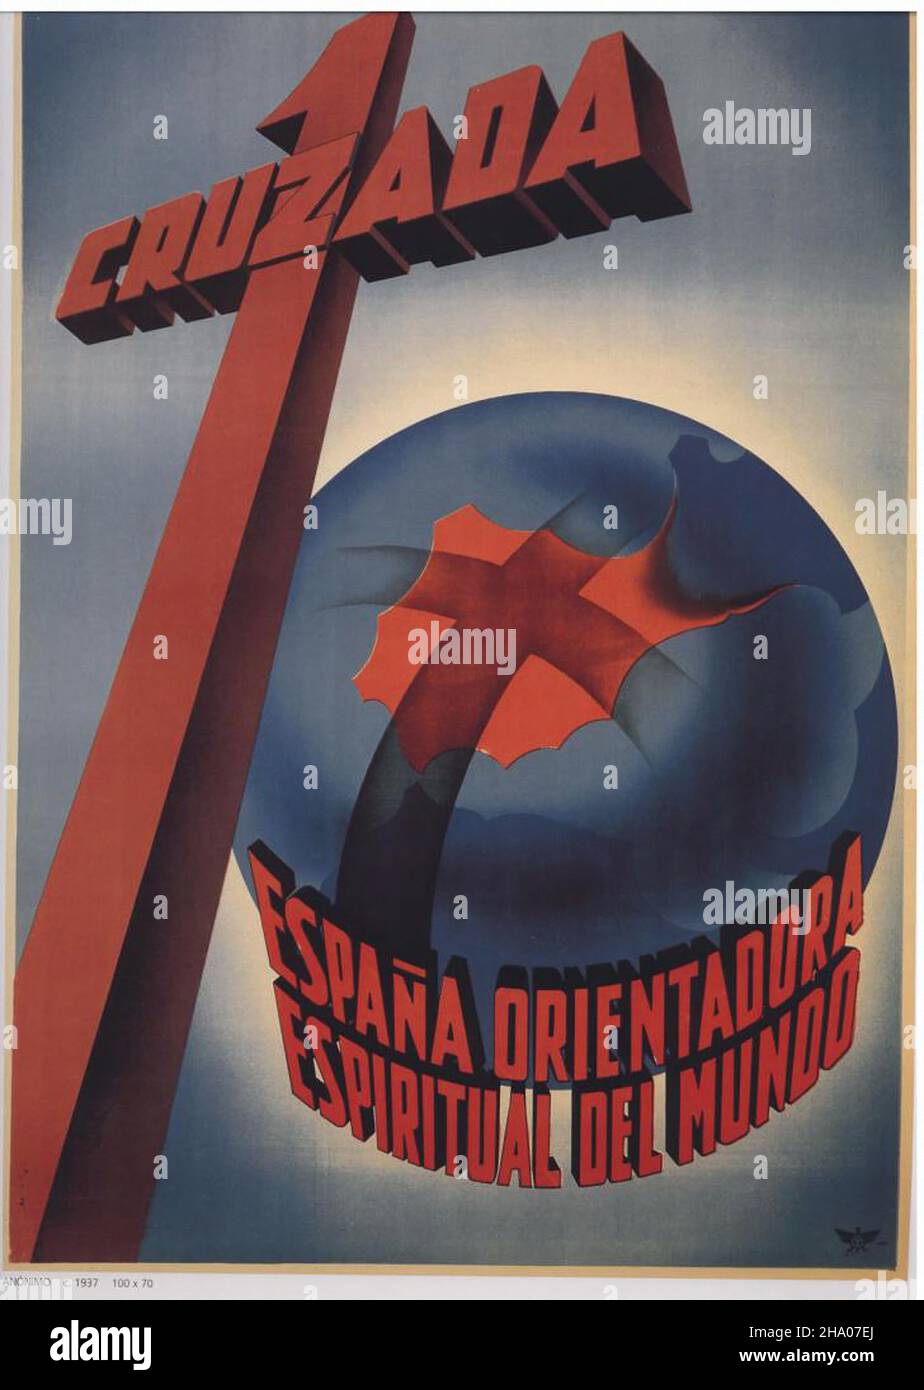 Cruzada Espana Orientadora Espirituel Del Mundo - affiche de propagande sur la guerre civile espagnole (Guerra civil Española) Banque D'Images